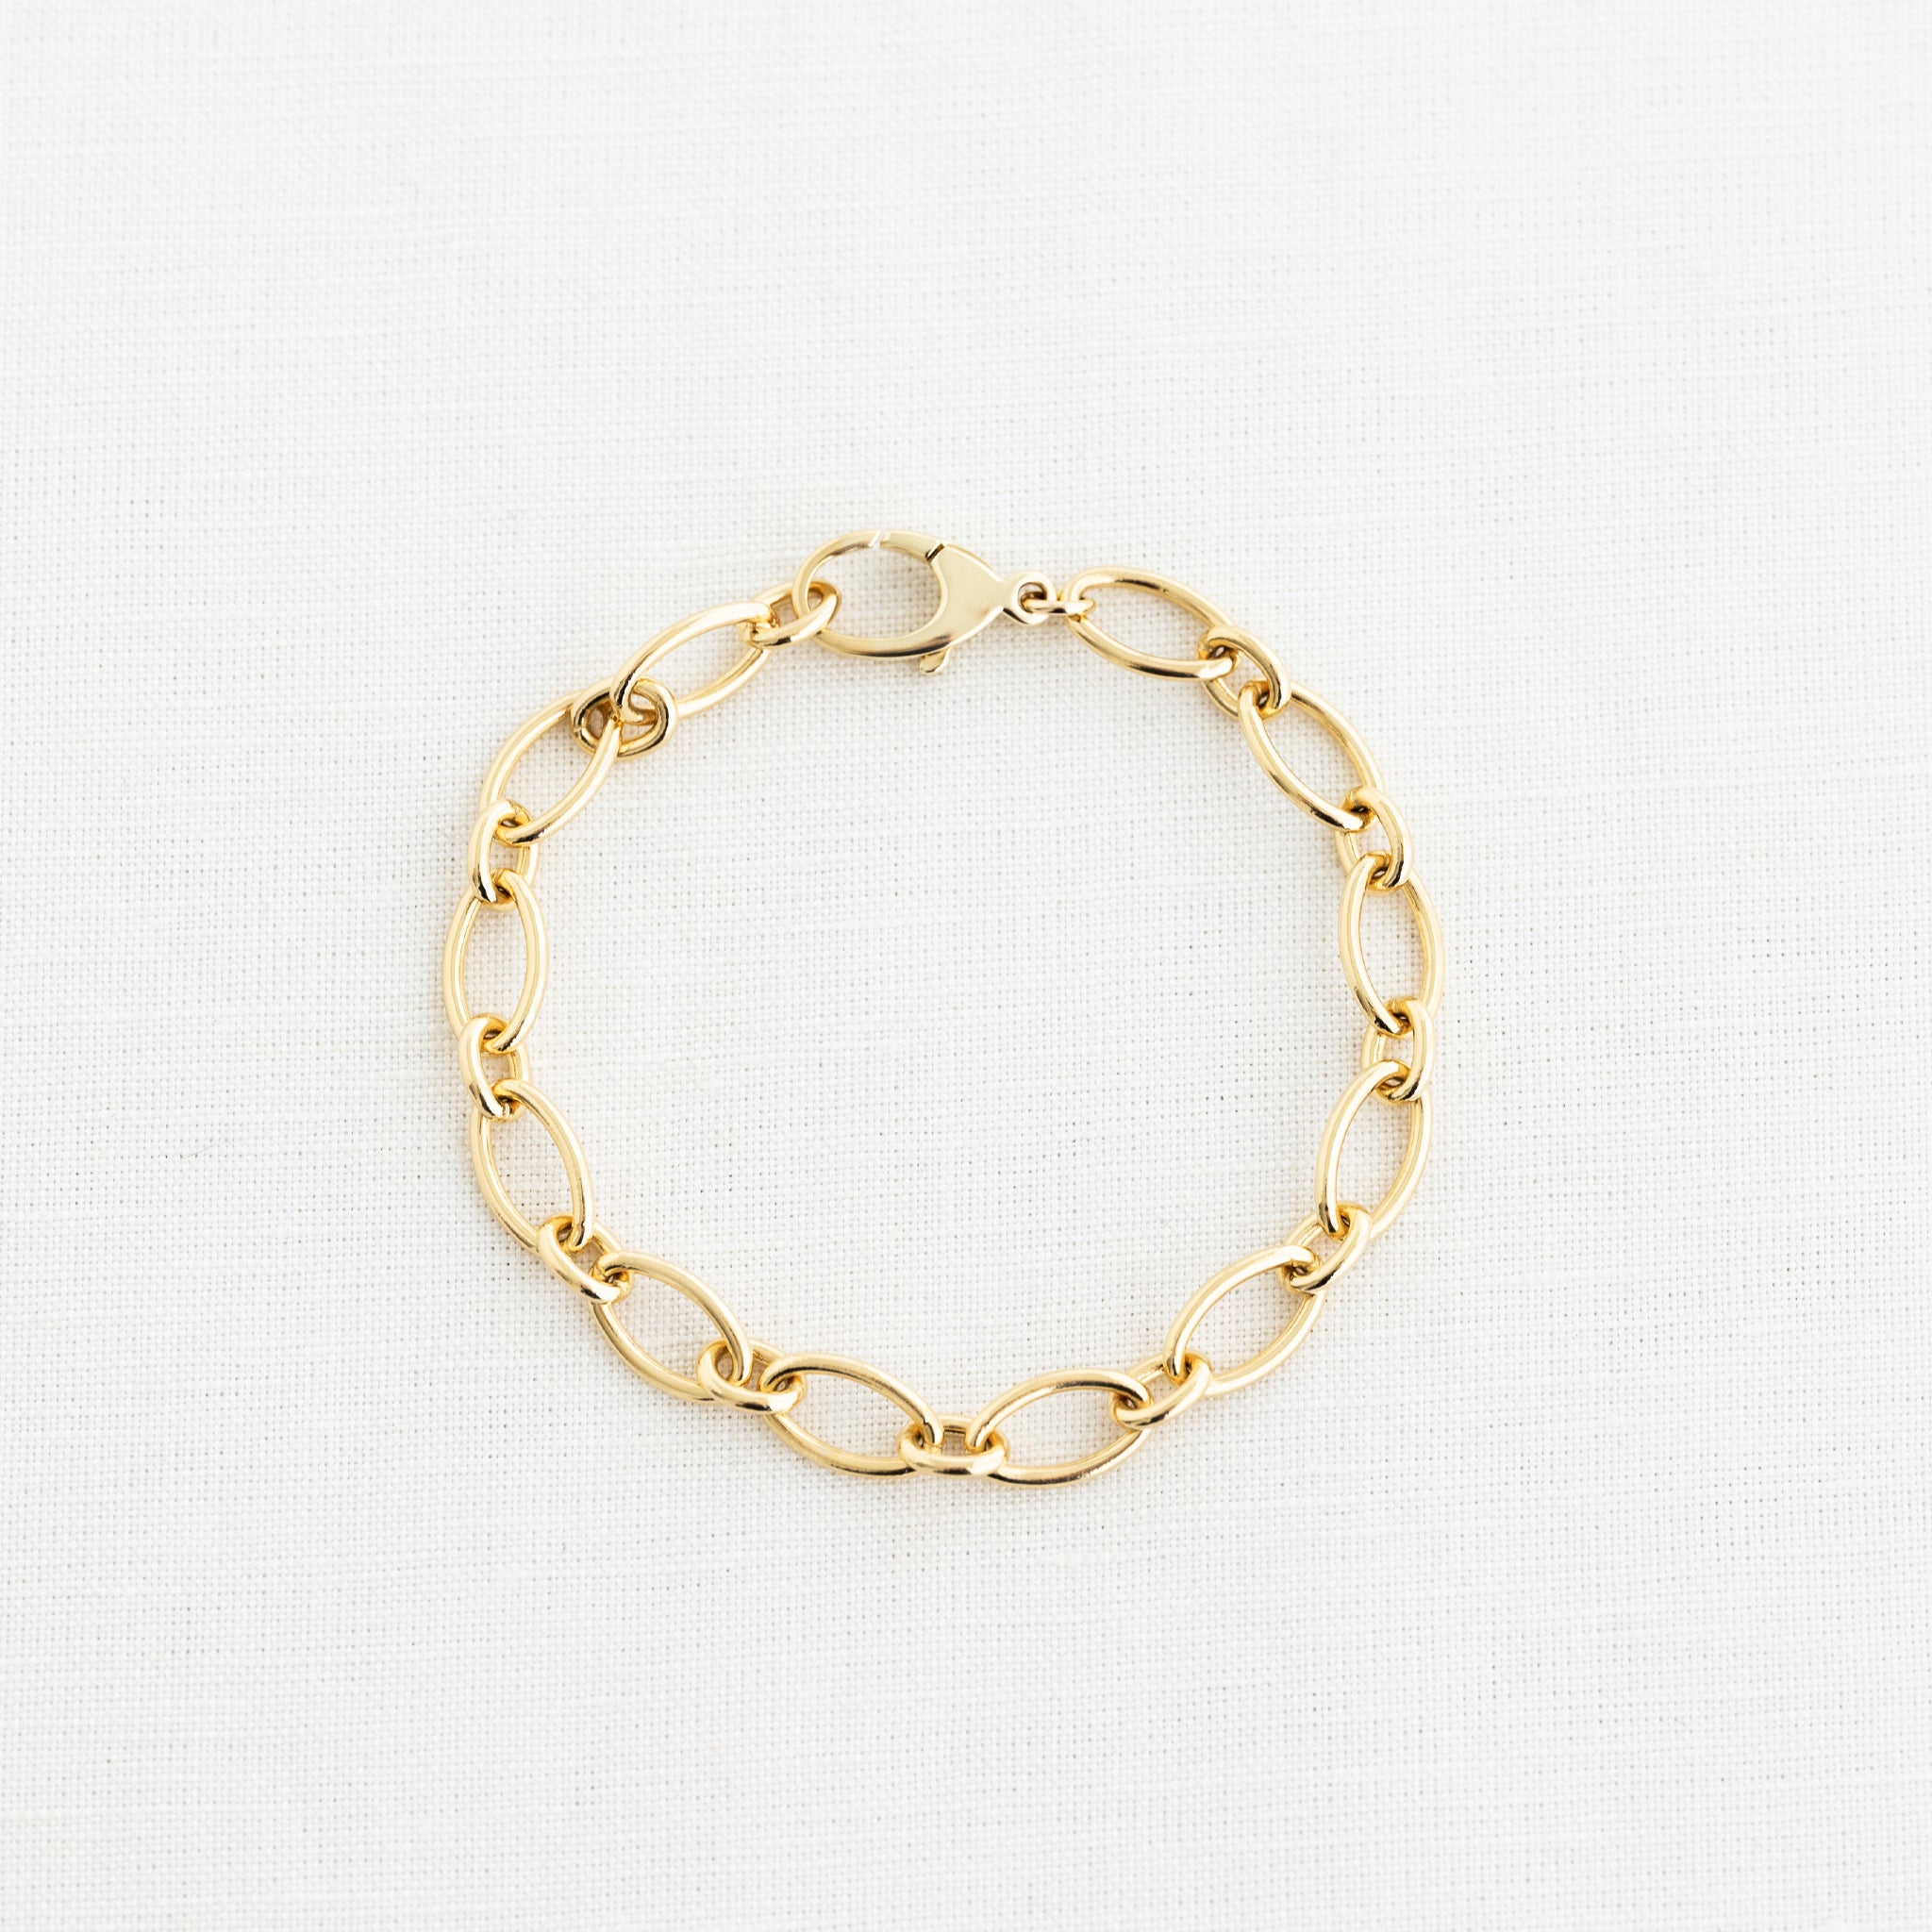 The Oval Chain Link Bracelet